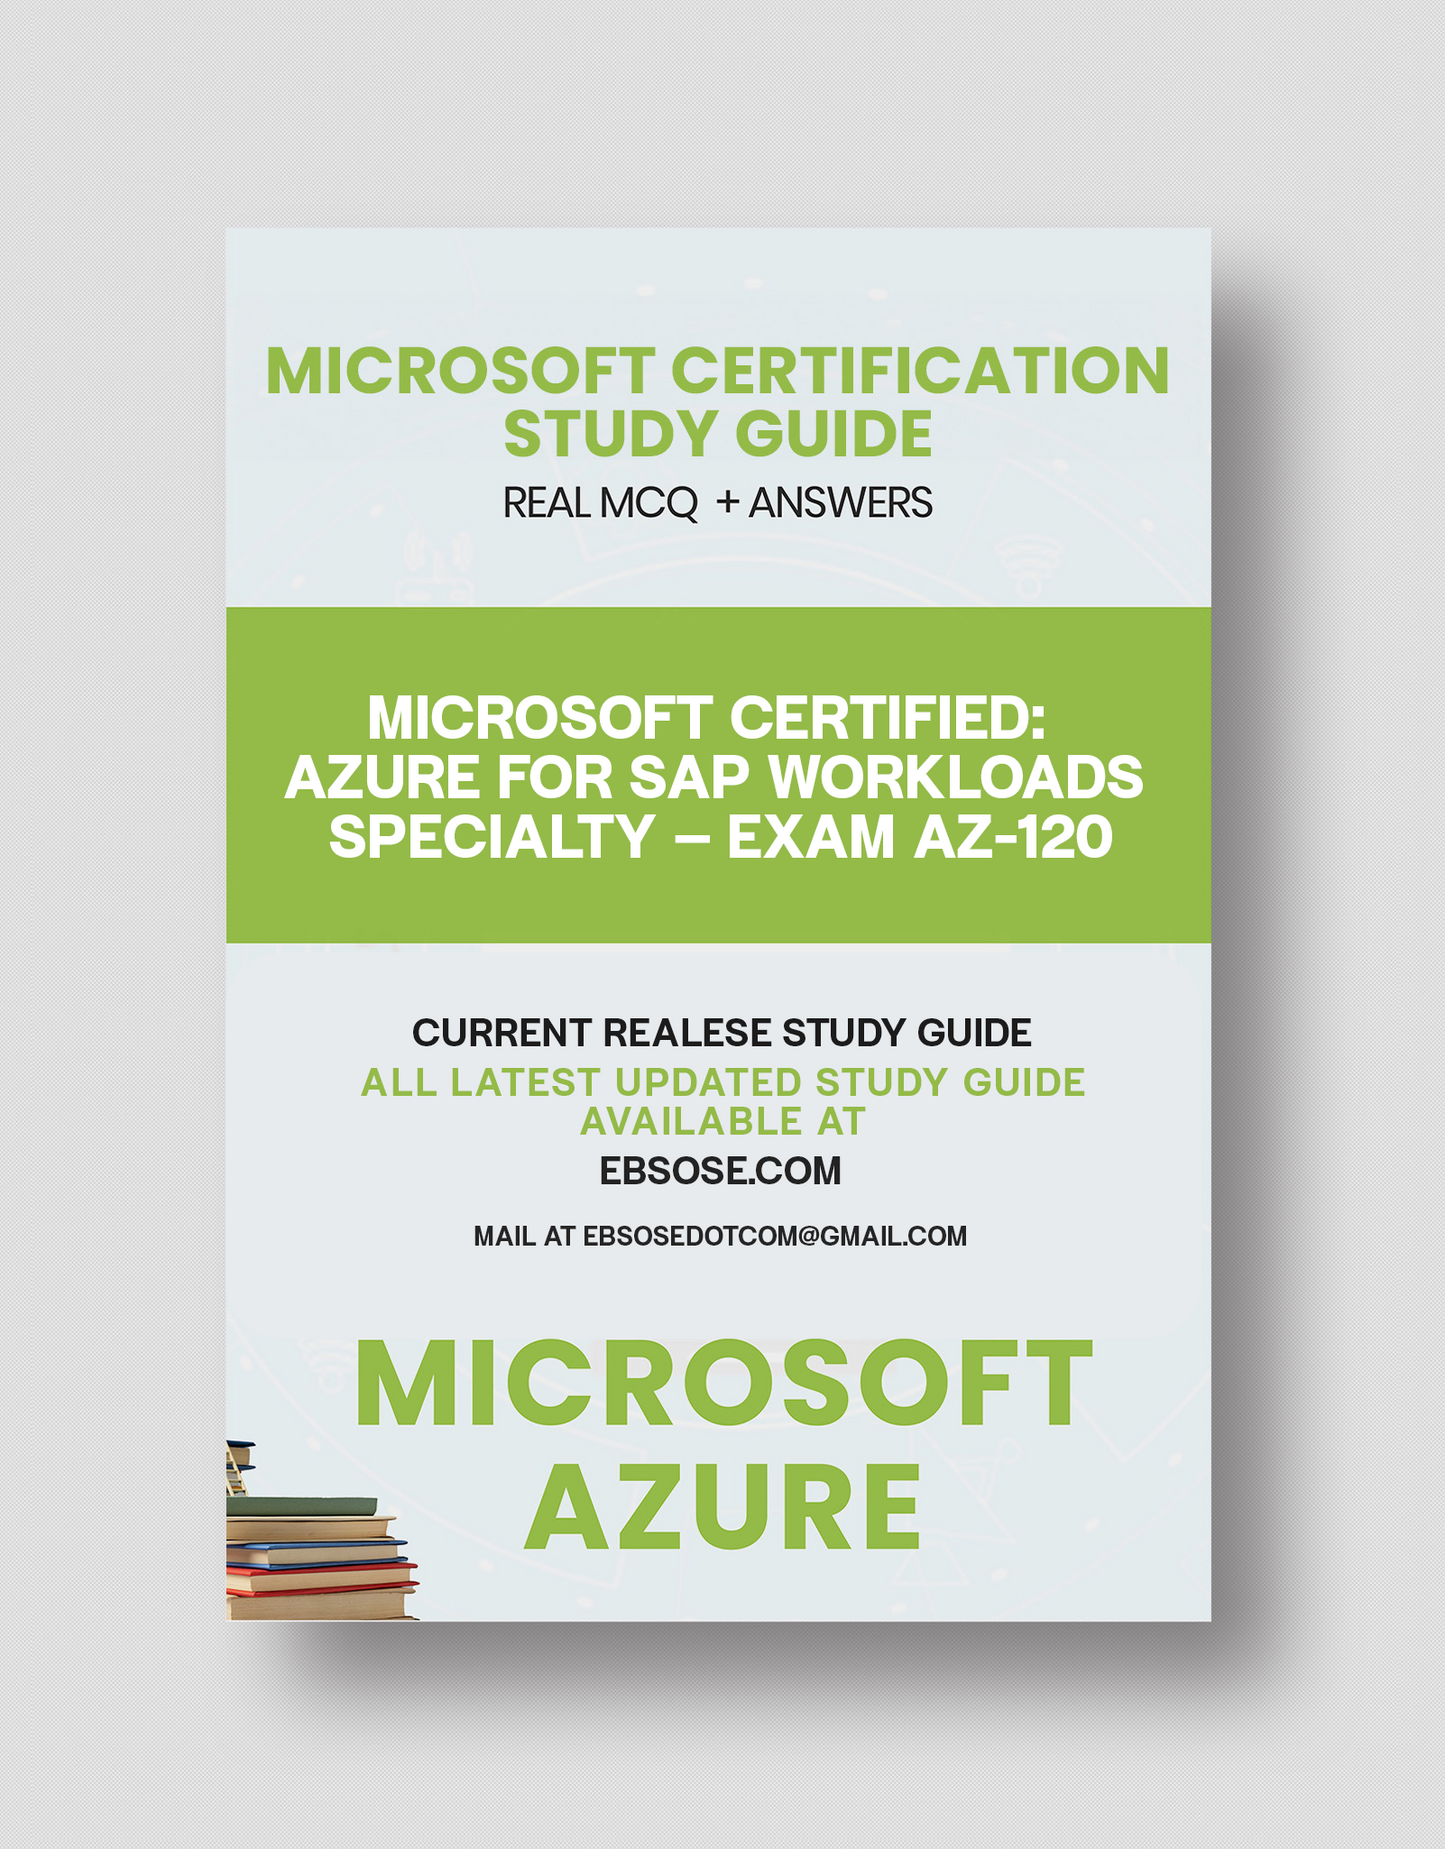 Microsoft Certified: Azure for SAP Workloads Specialty – Exam AZ-120